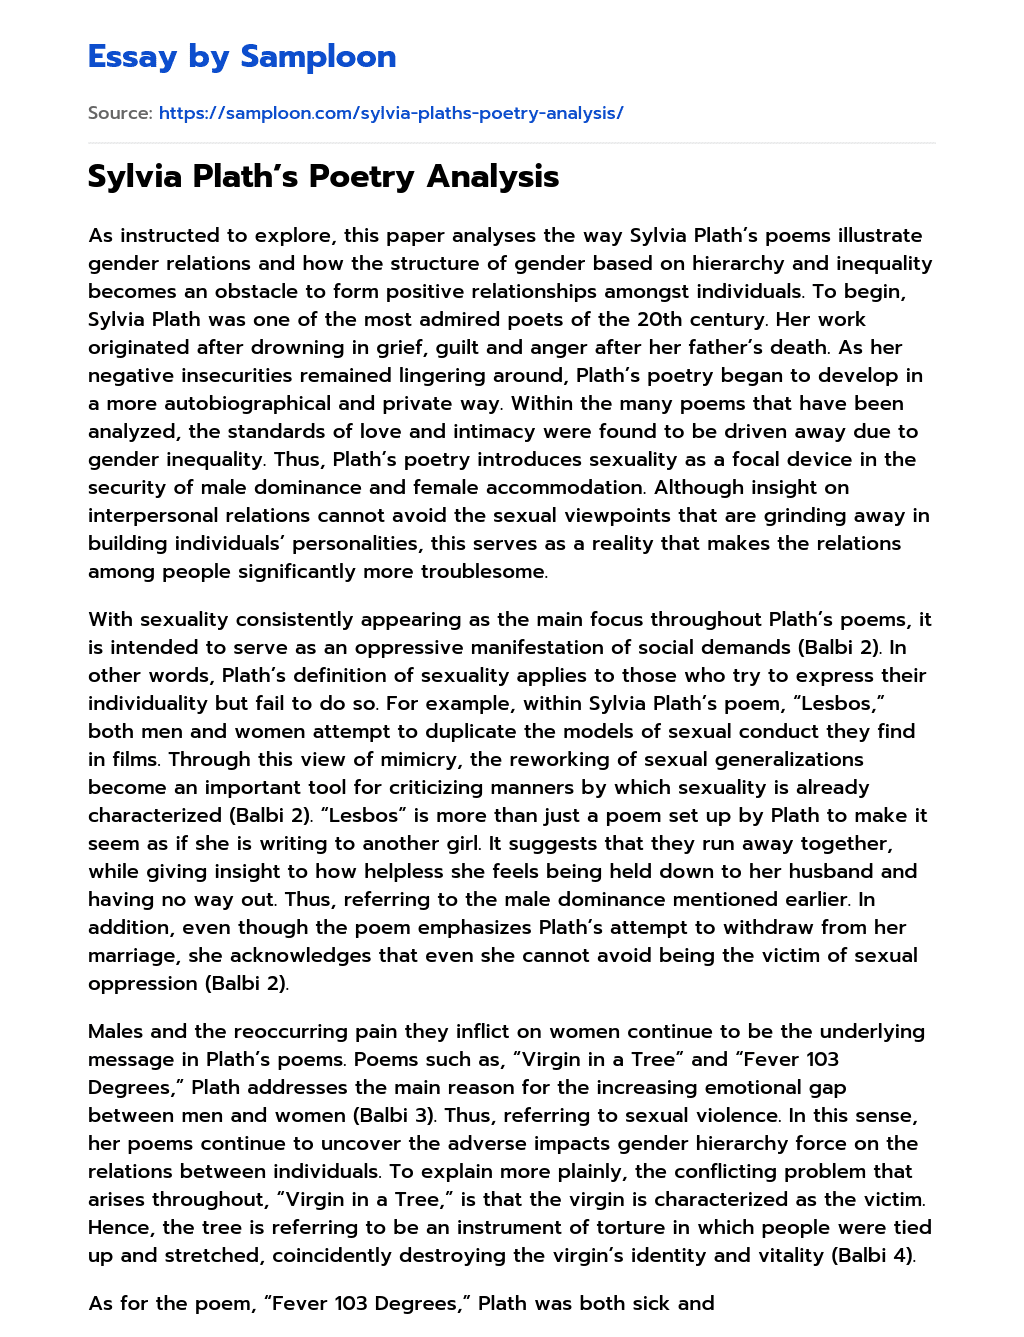 Sylvia Plath’s Poetry Analysis essay